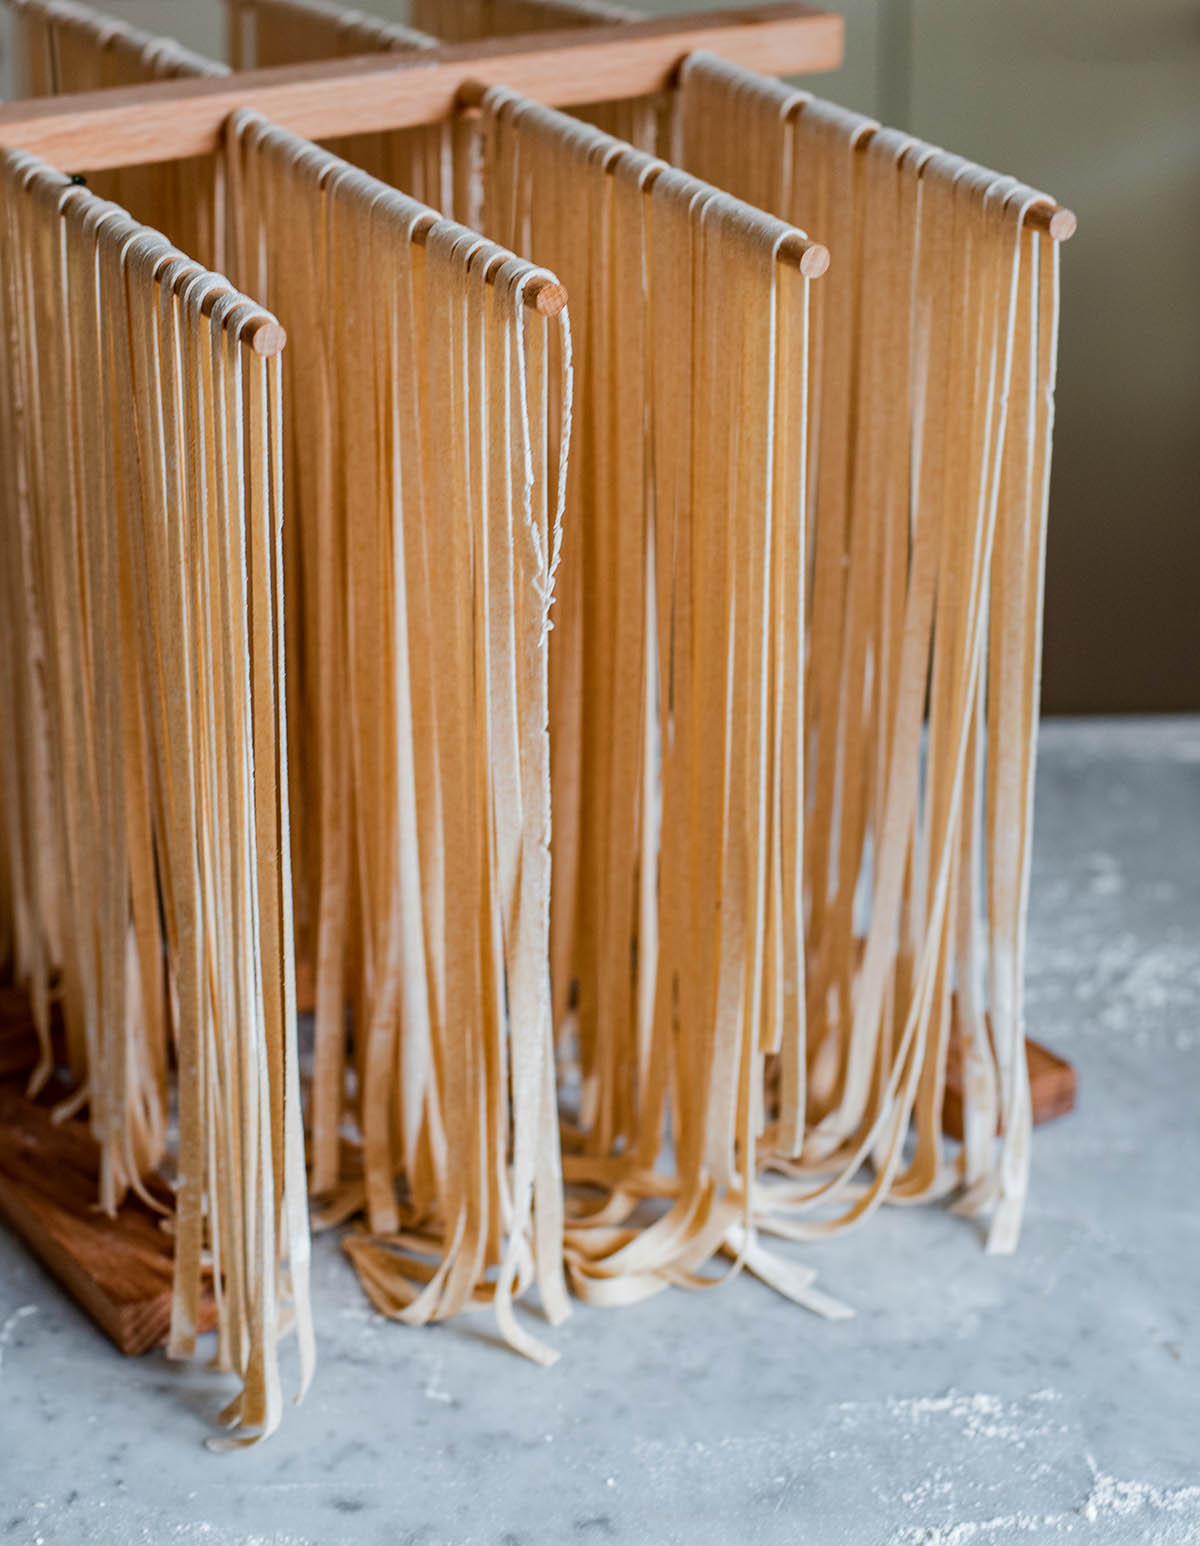 Spelt pasta cut into fettuccine drying on a wooden rack.